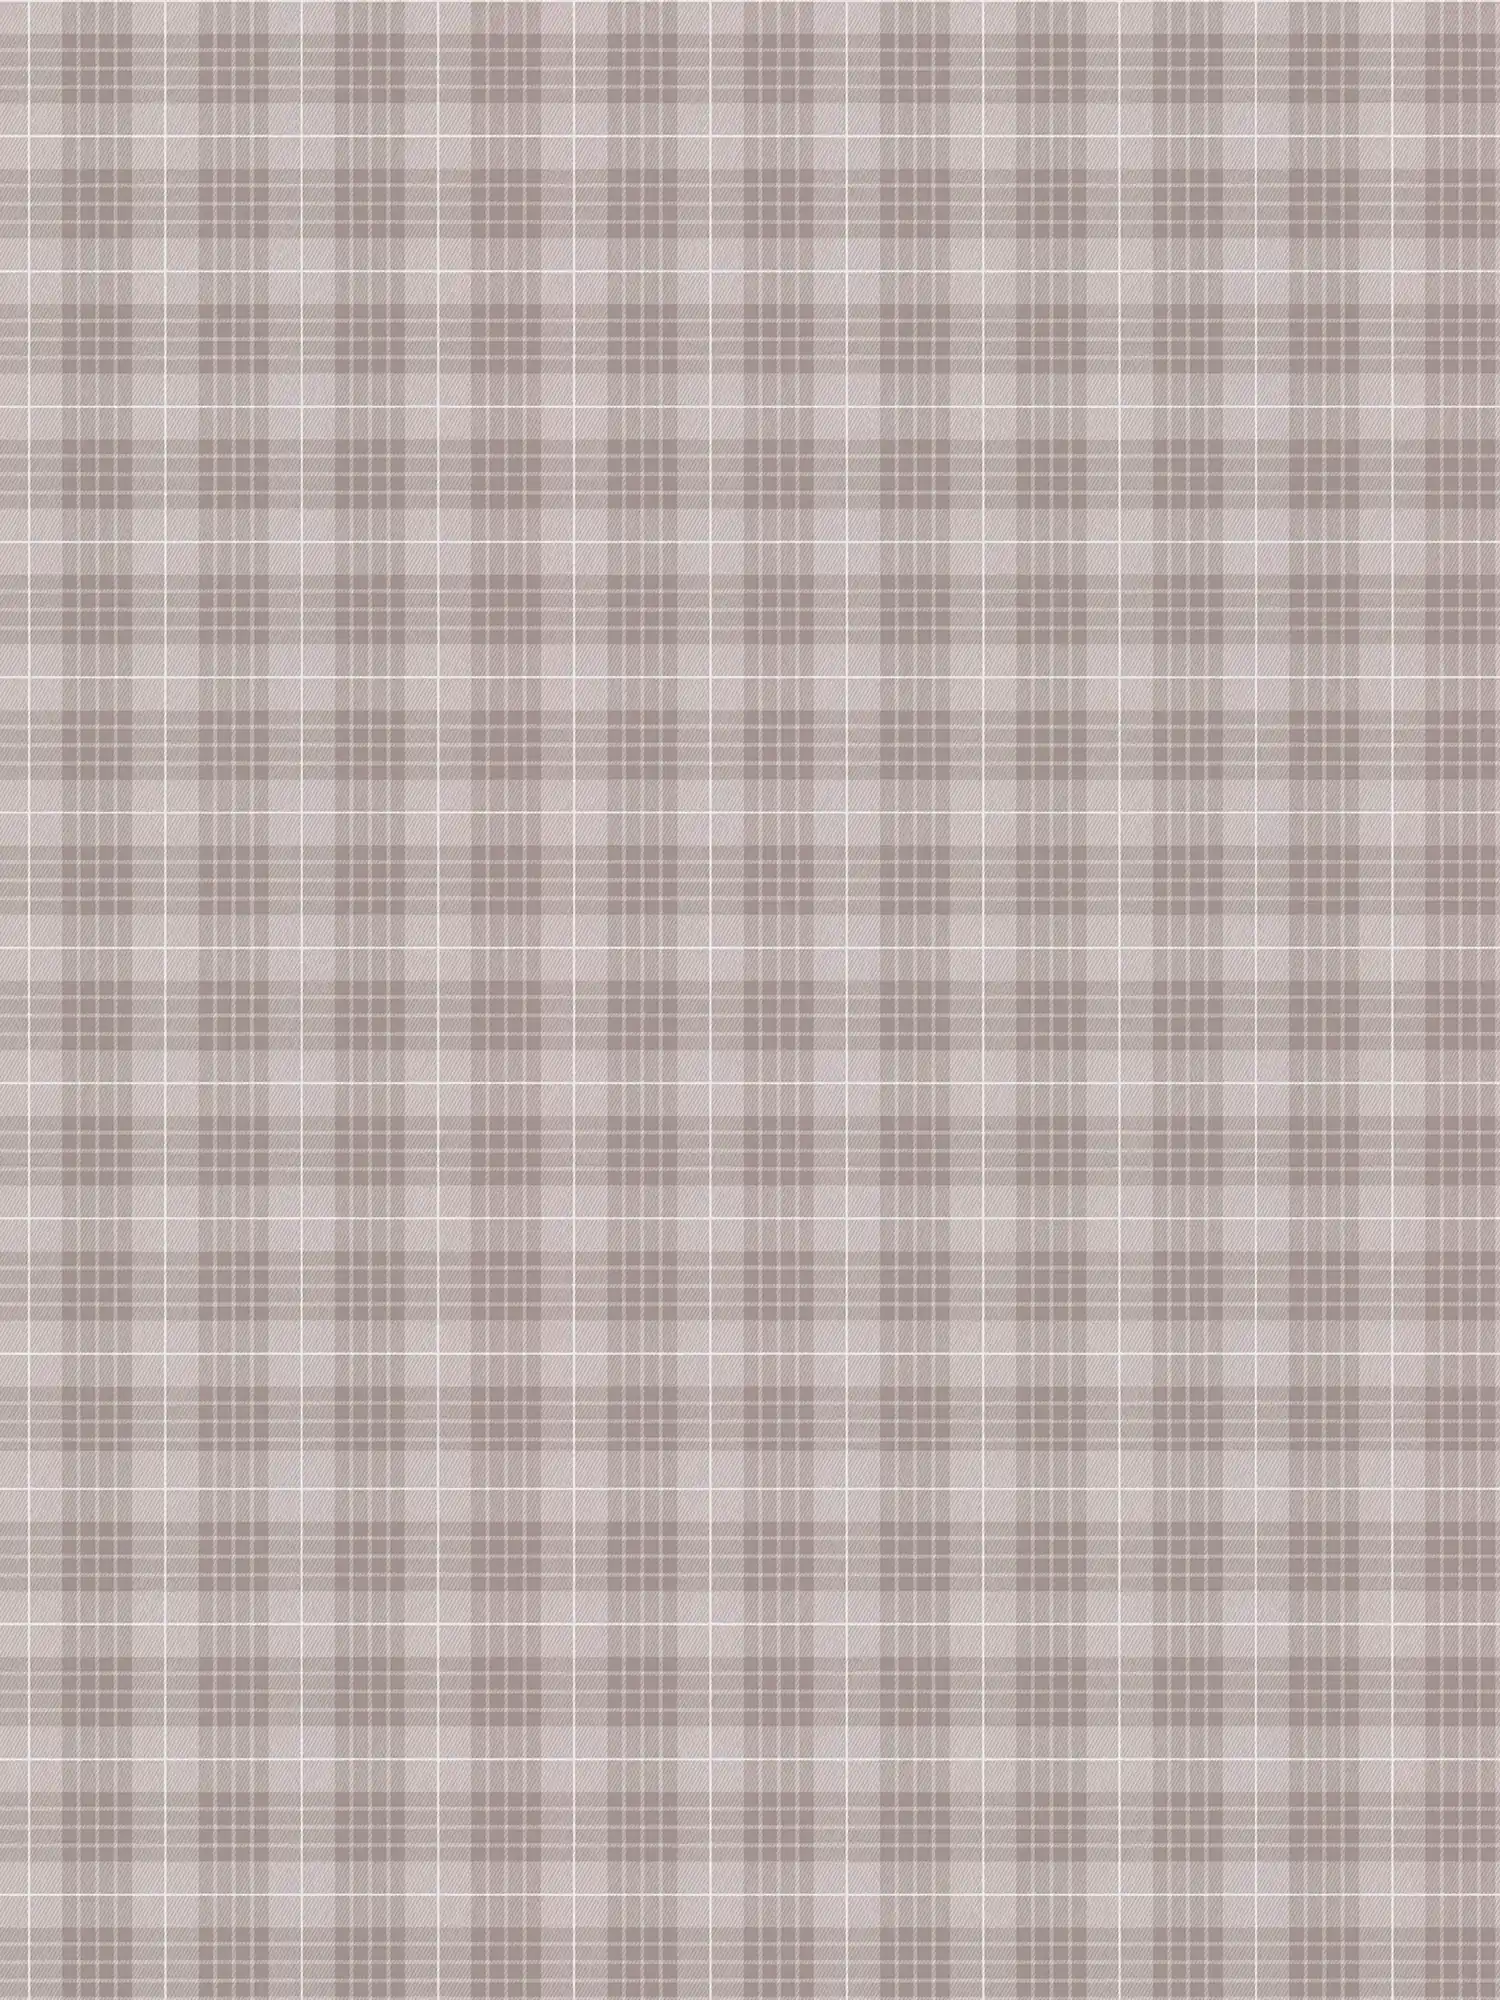         Scottish Textile Look Checkered Pattern Wallpaper - Grey, White
    